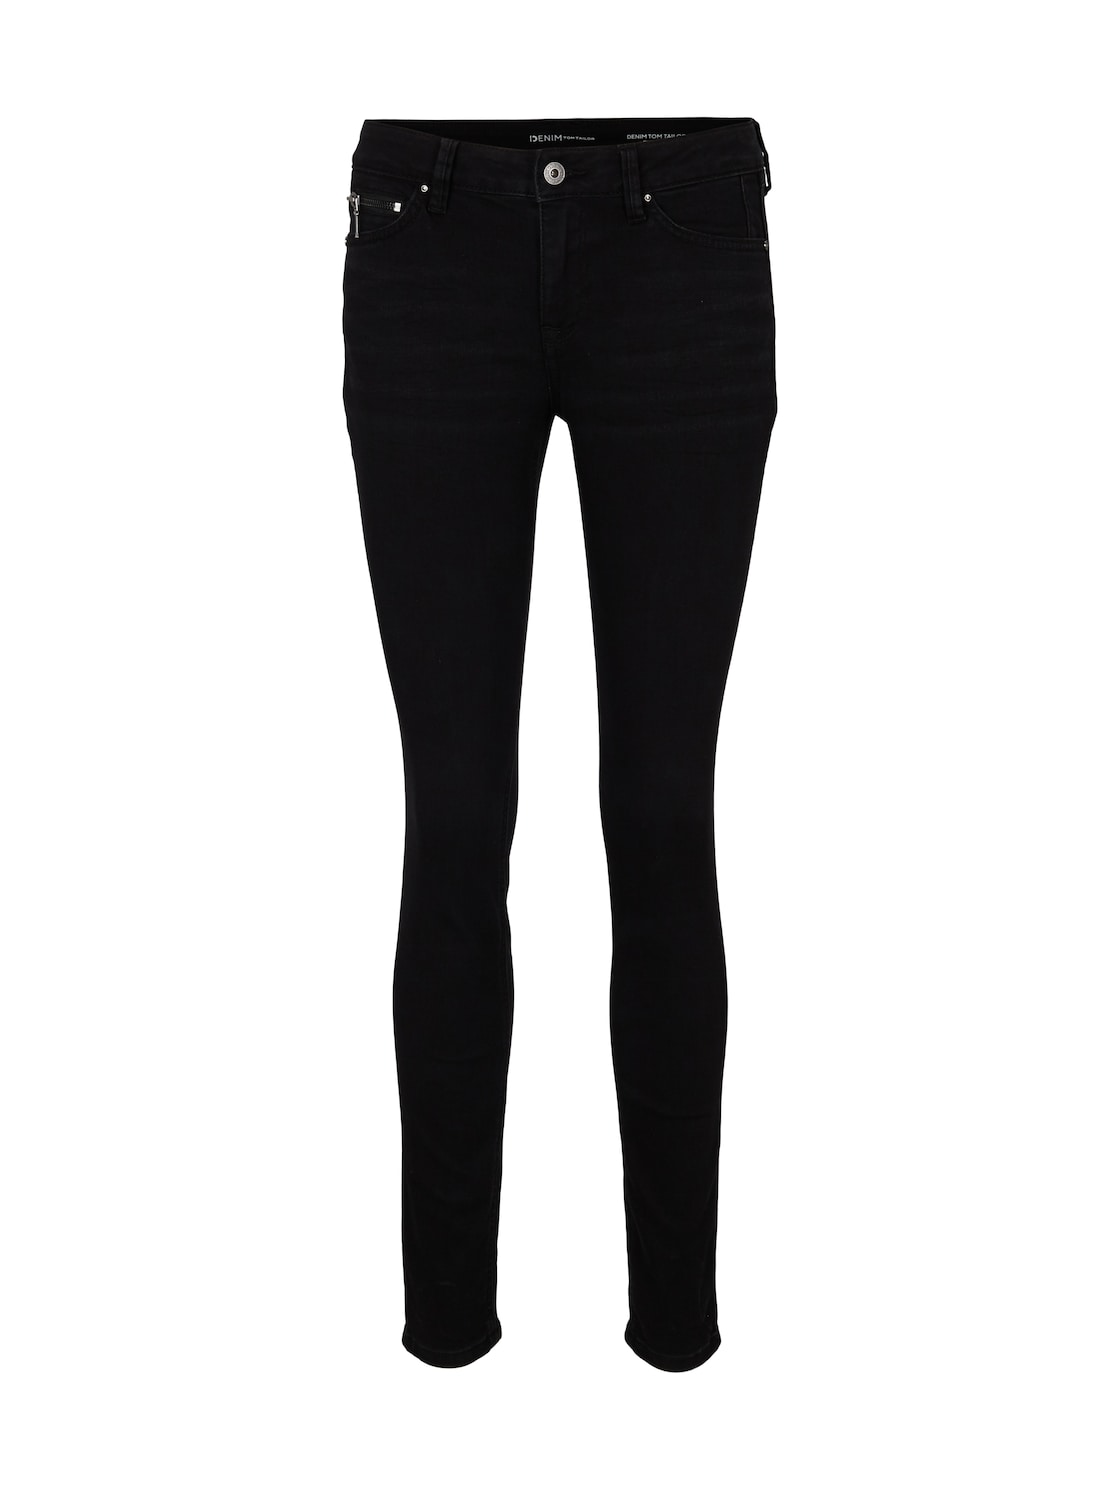 TOM TAILOR DENIM Damen Jona Extra Skinny Jeans mit recyceltem Polyester, schwarz, Uni, Gr. 32/32 von Tom Tailor Denim